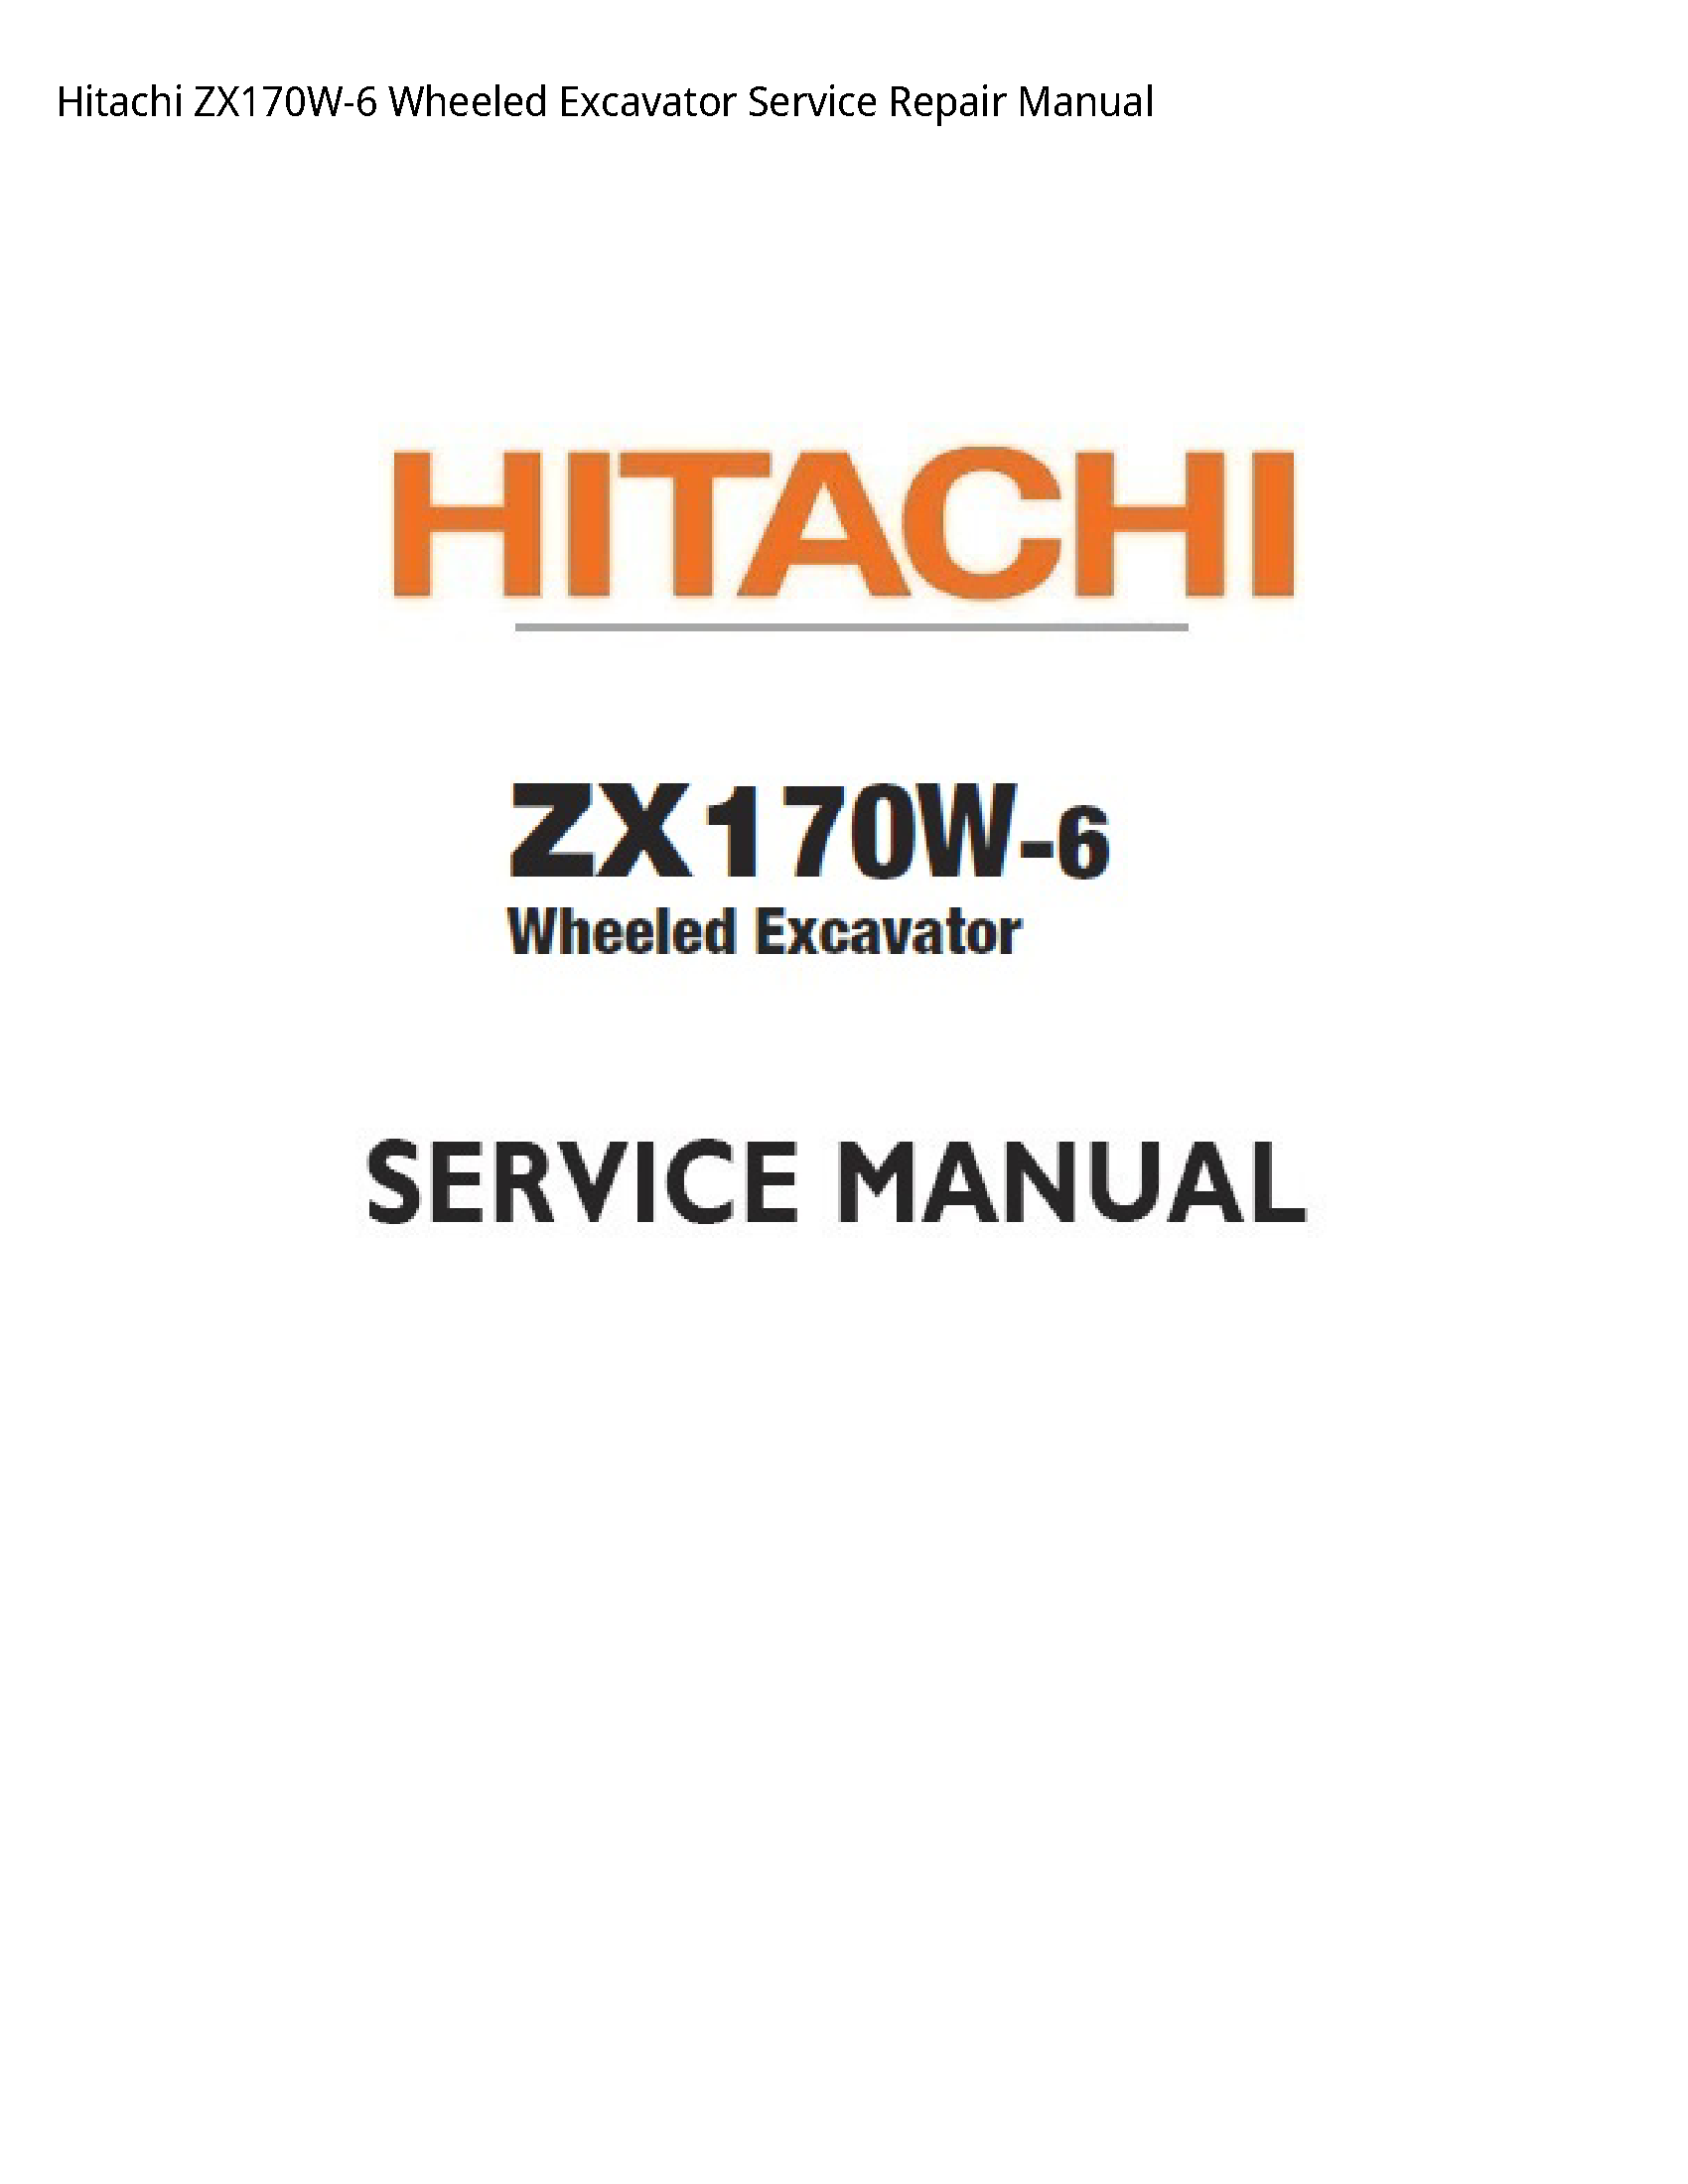 Hitachi ZX170W-6 Wheeled Excavator manual